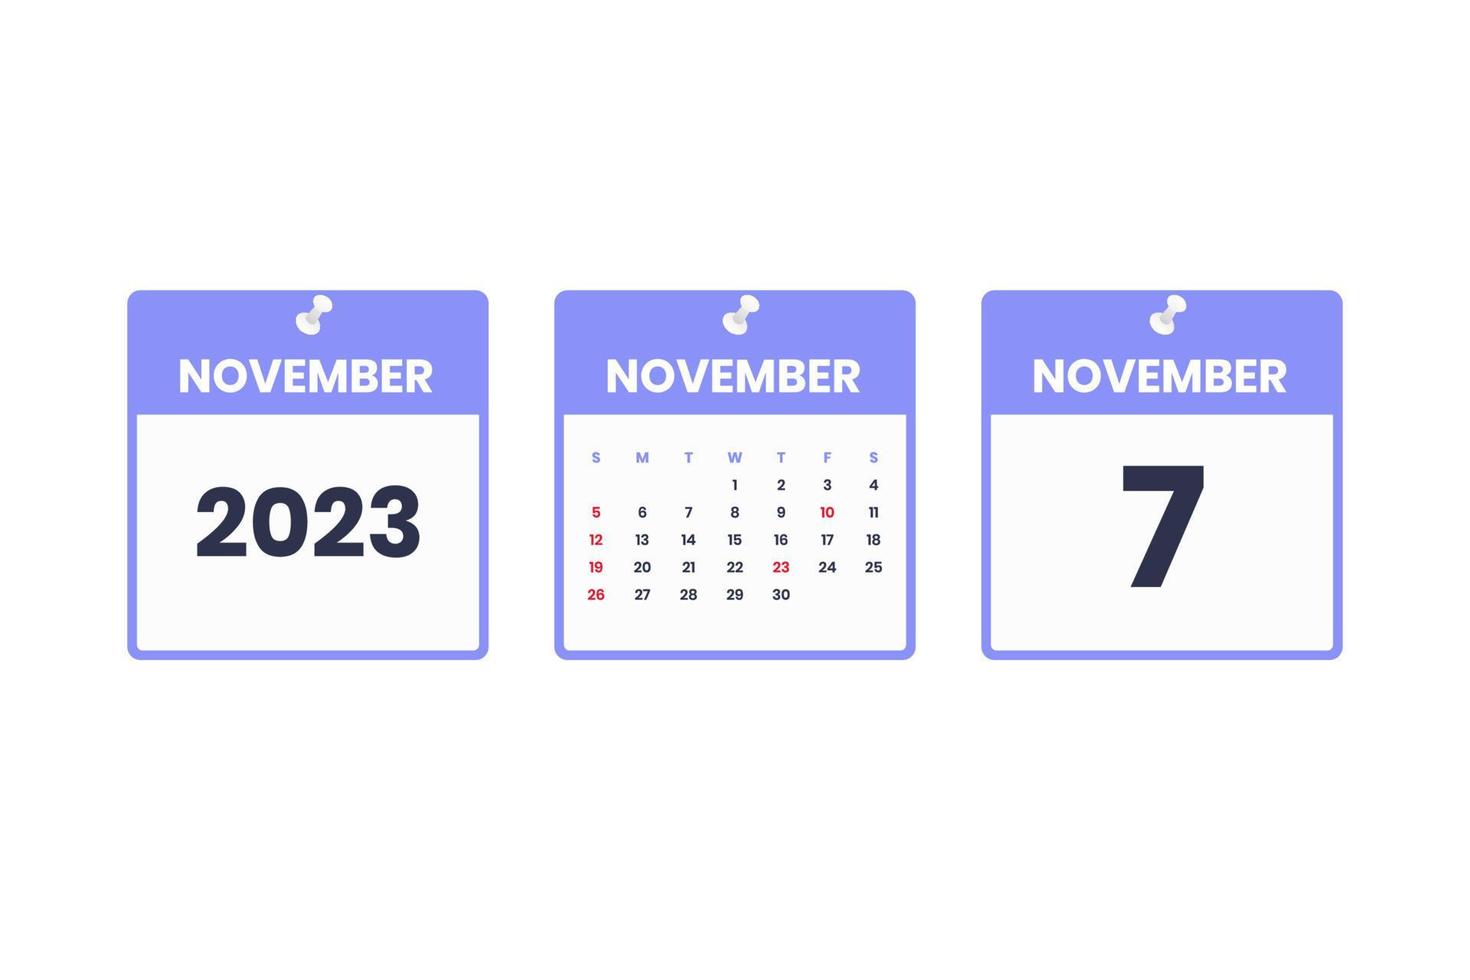 November calendar design. November 7 2023 calendar icon for schedule, appointment, important date concept vector